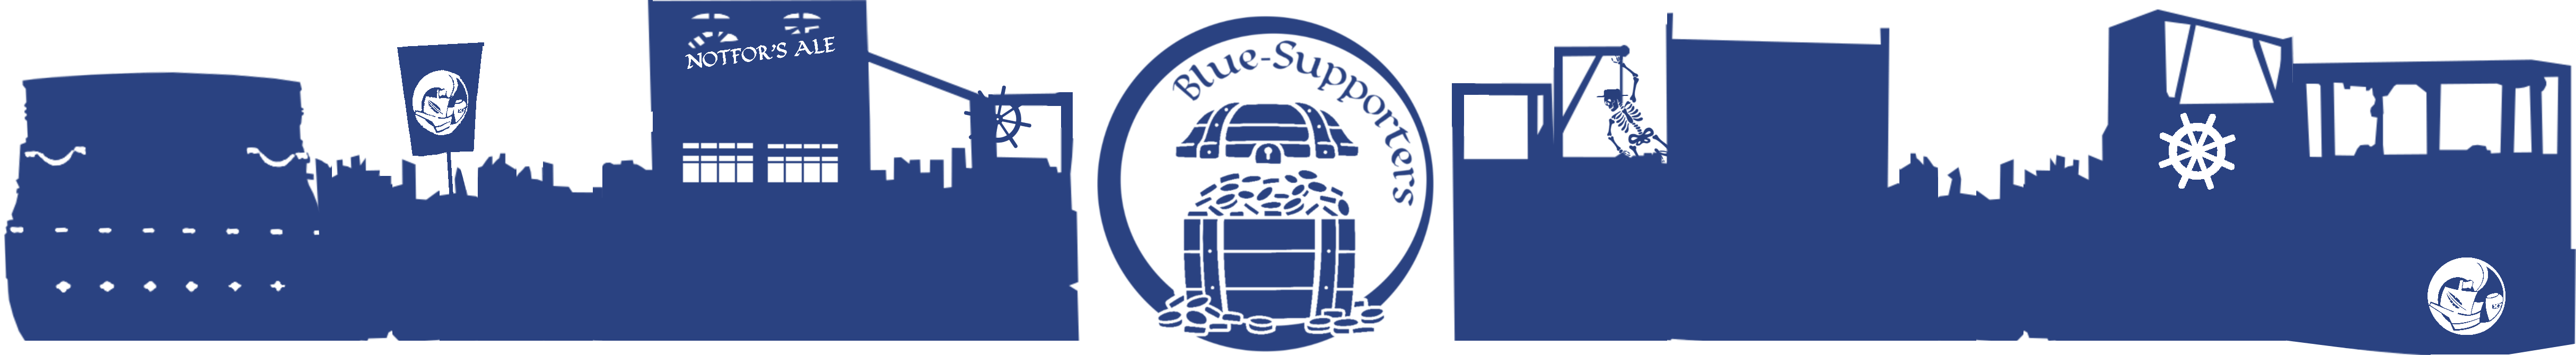 Blue Support logo